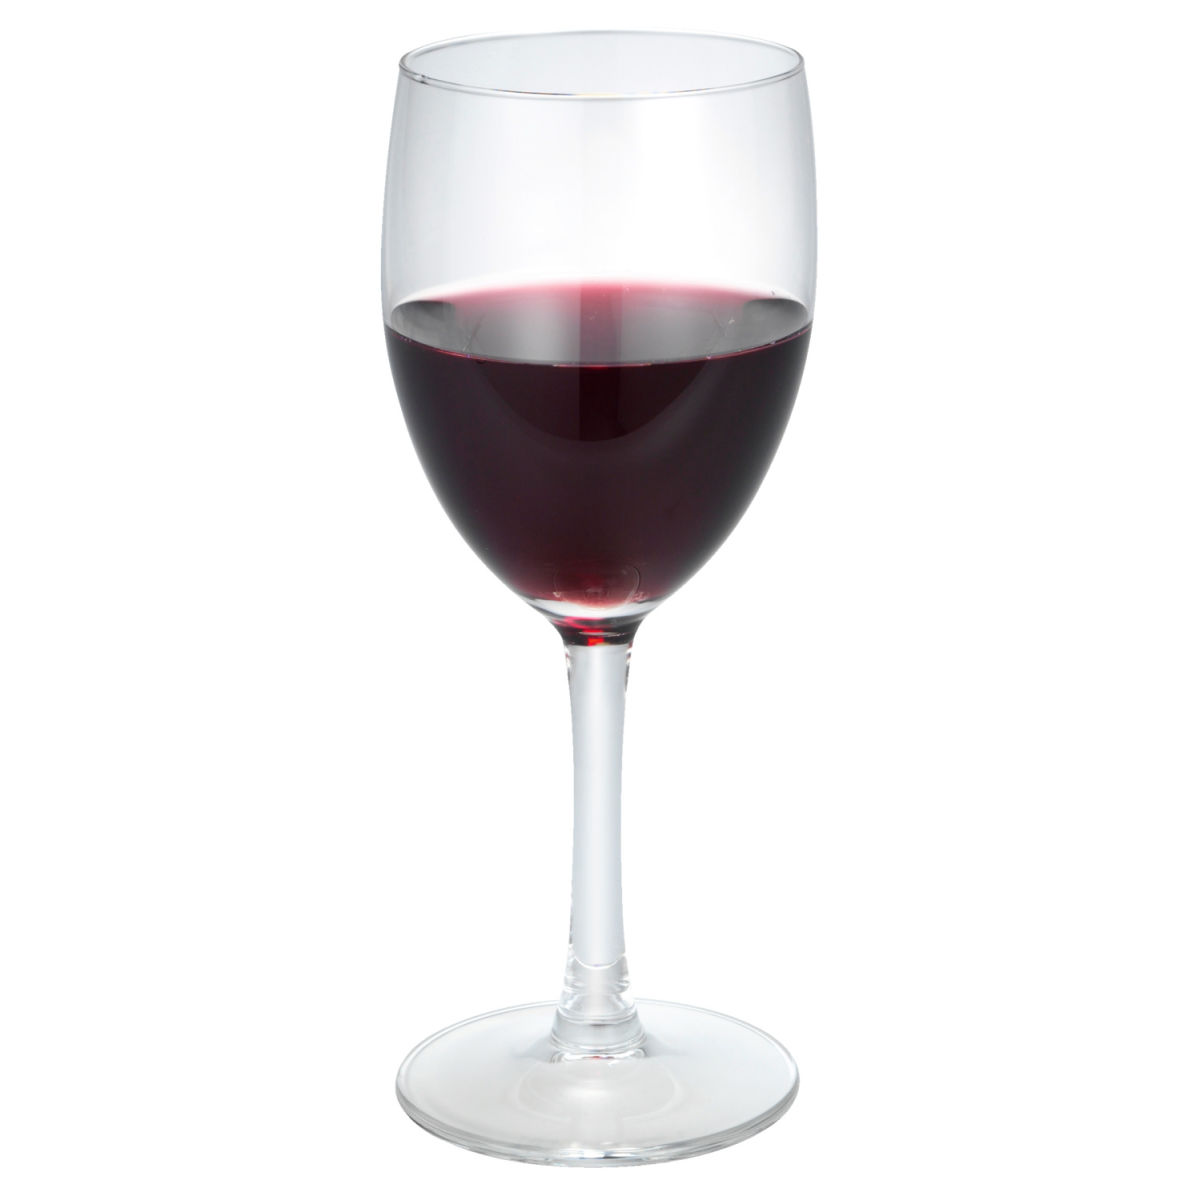 Royal leerdam Witte wijnglas Claret met vulstreepje; 330ml, 7x18.2 cm (ØxH); transparant; 0.25 l vulstreepje, 12 stuk / verpakking